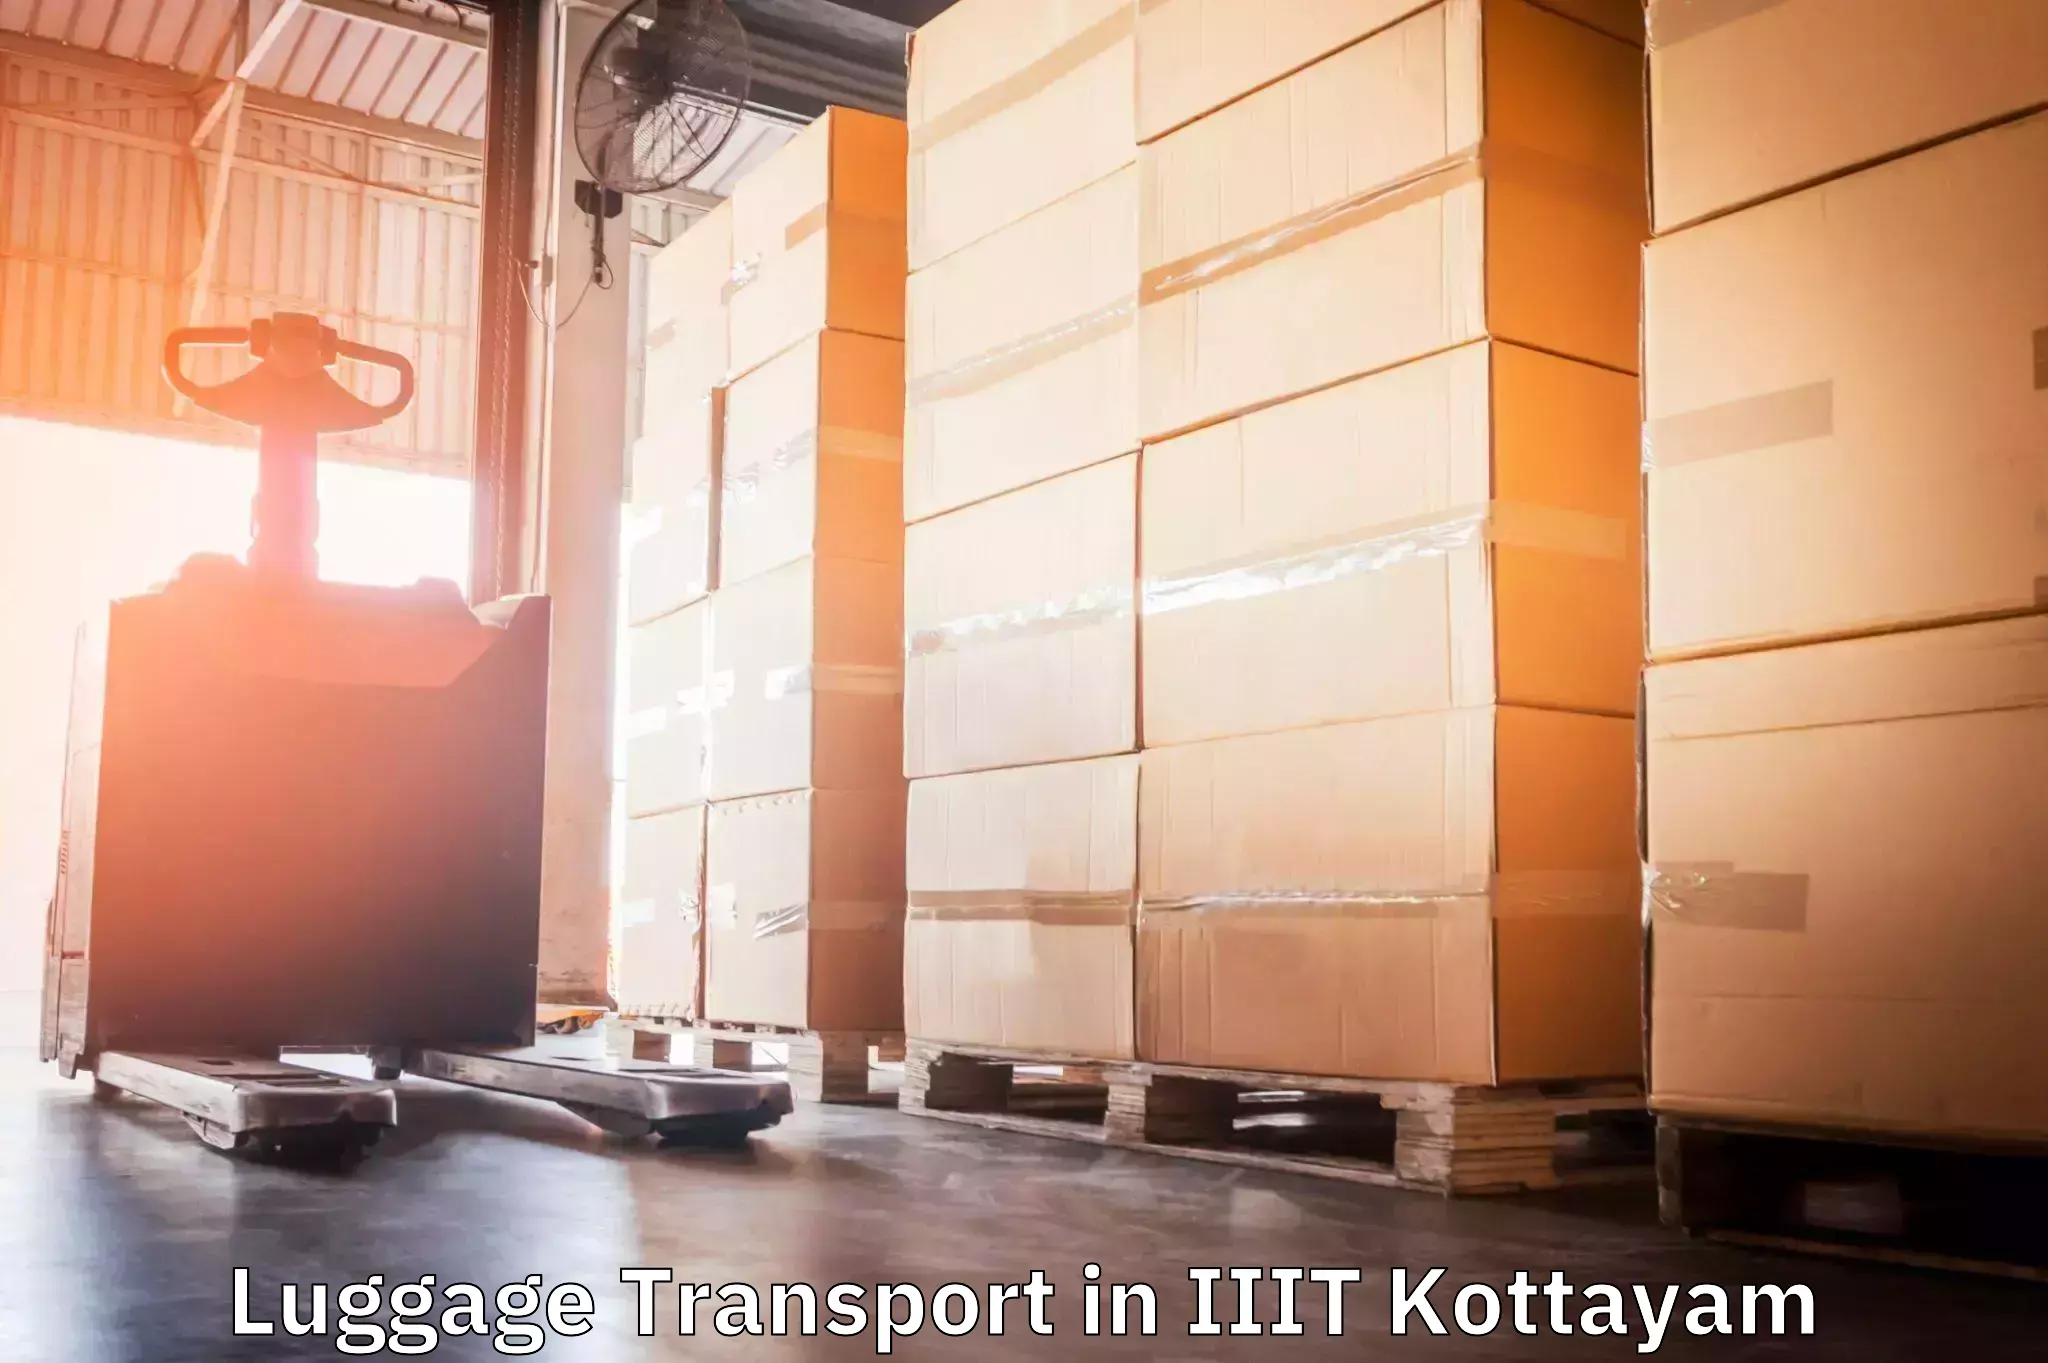 Efficient baggage transport in IIIT Kottayam